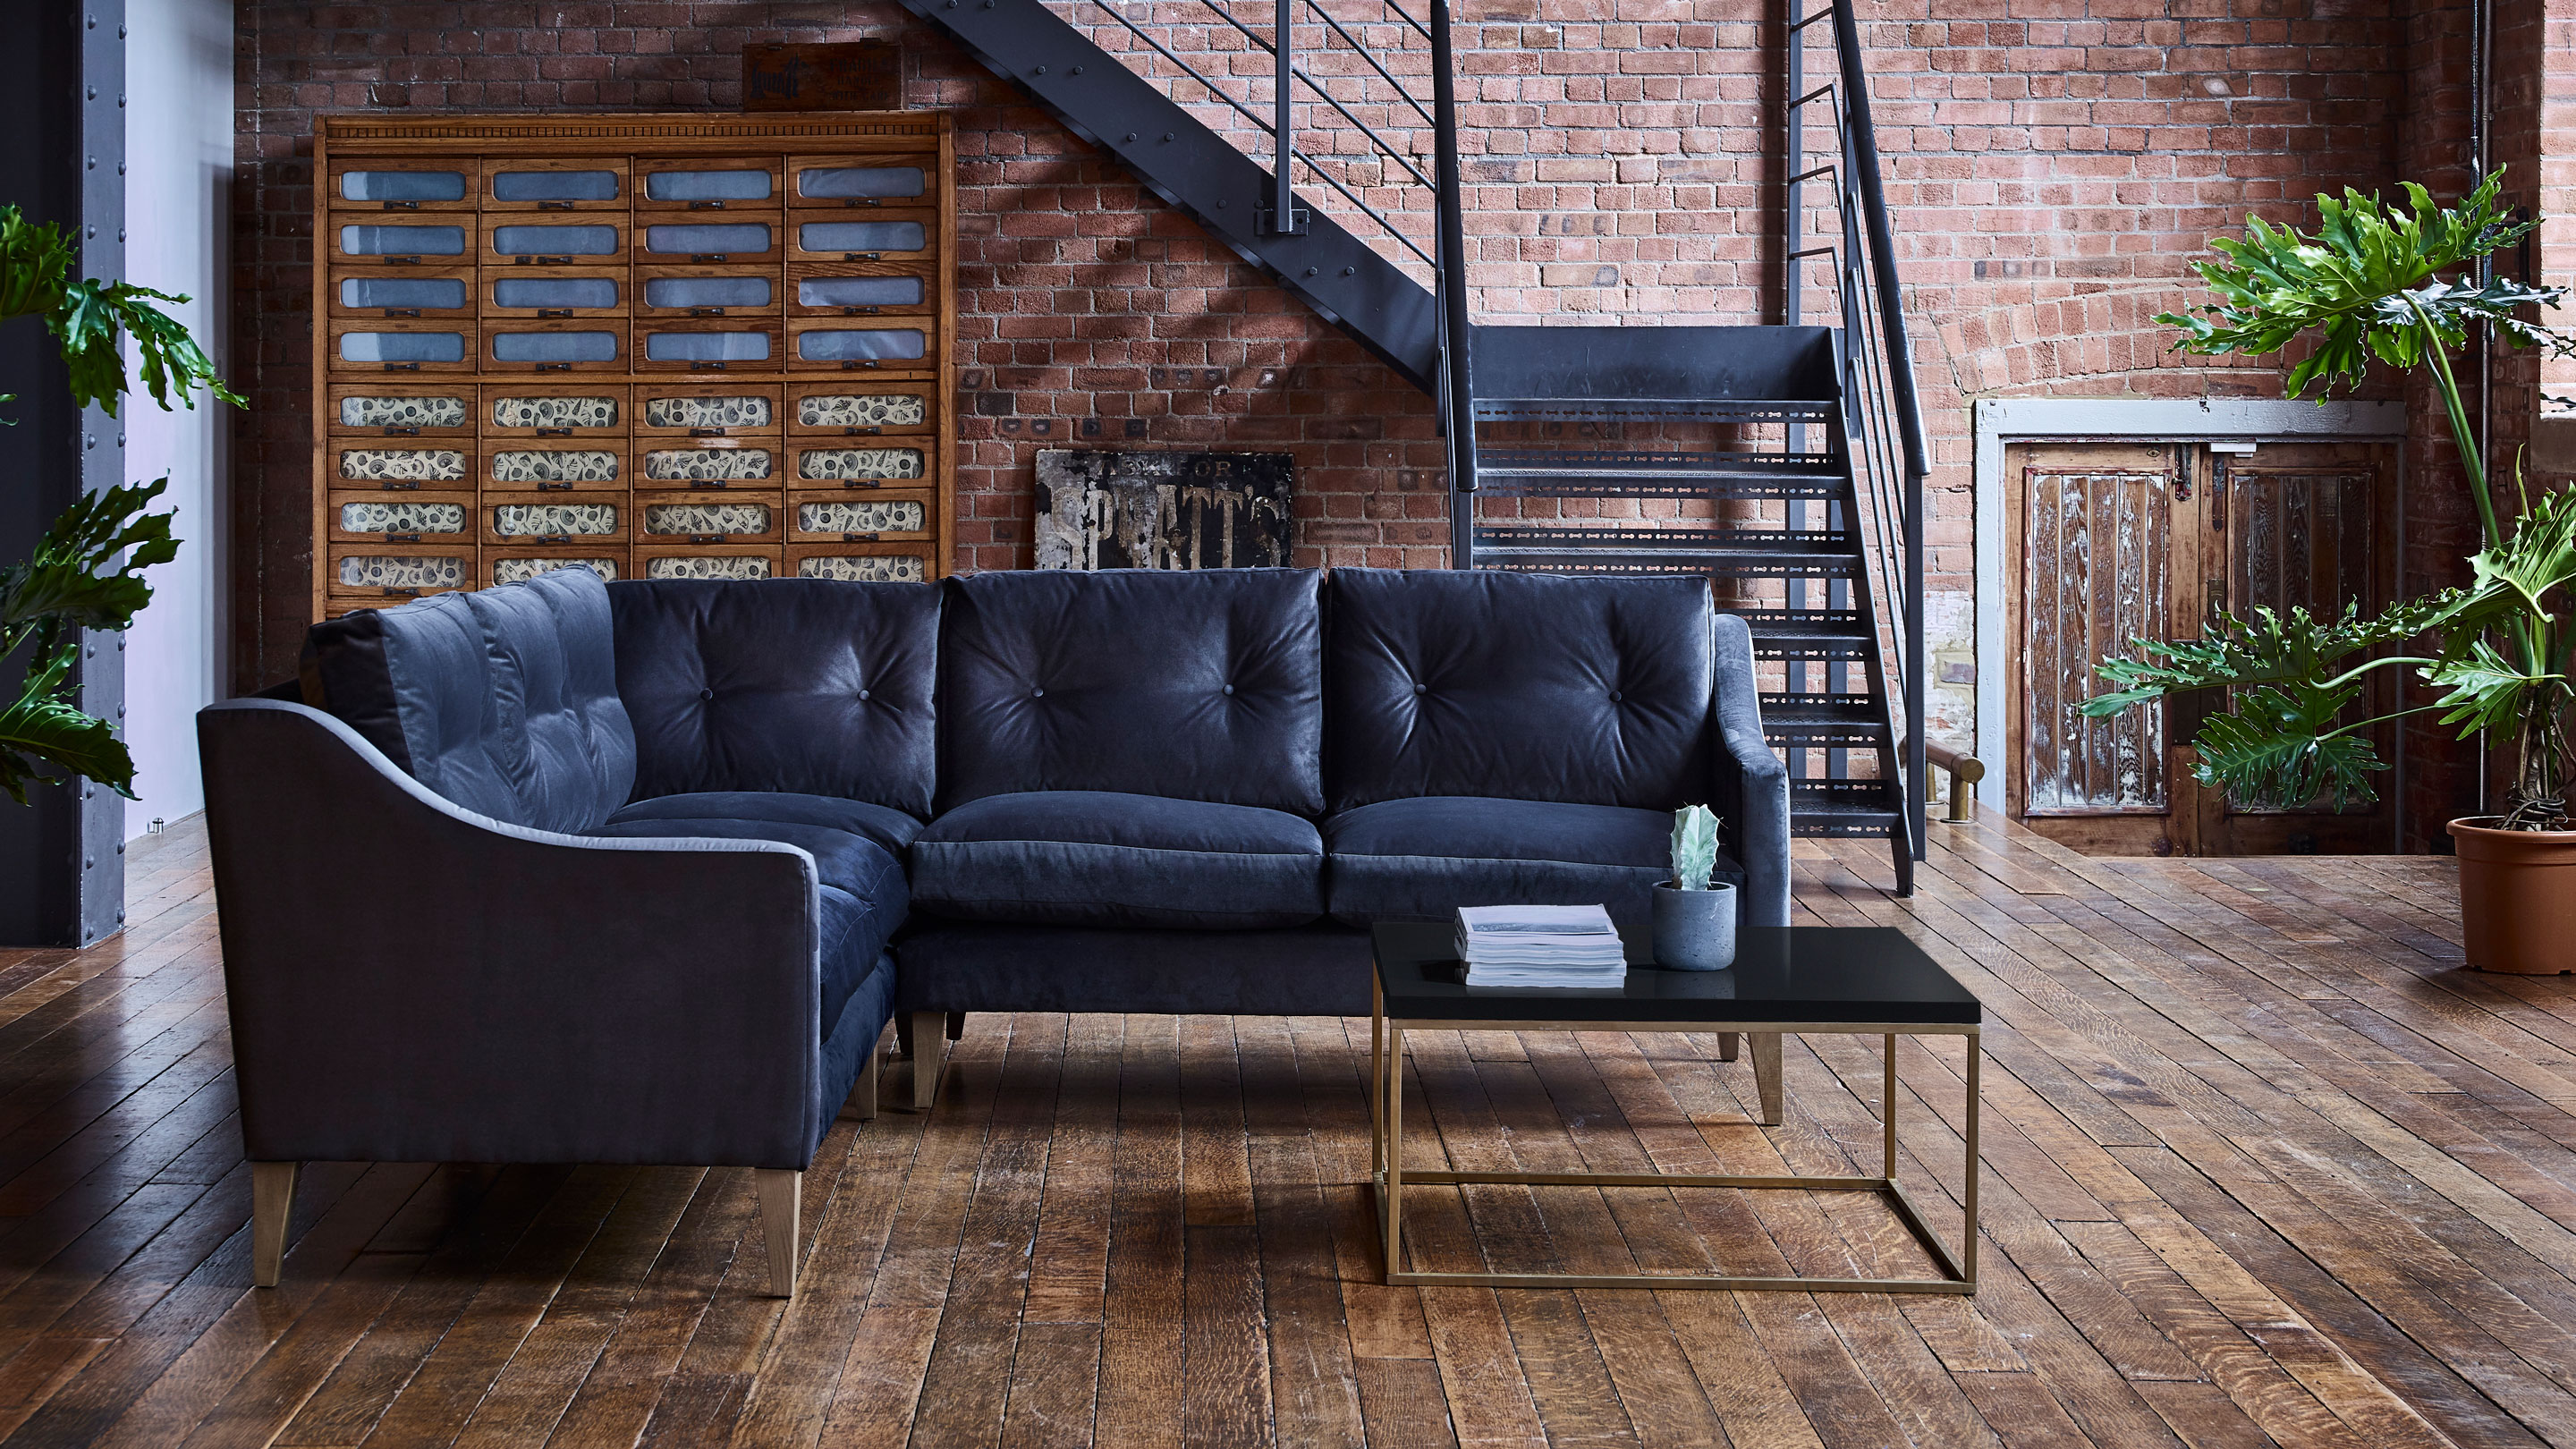 Living Room Furniture For Dark Wood, Sofa On Hardwood Floor